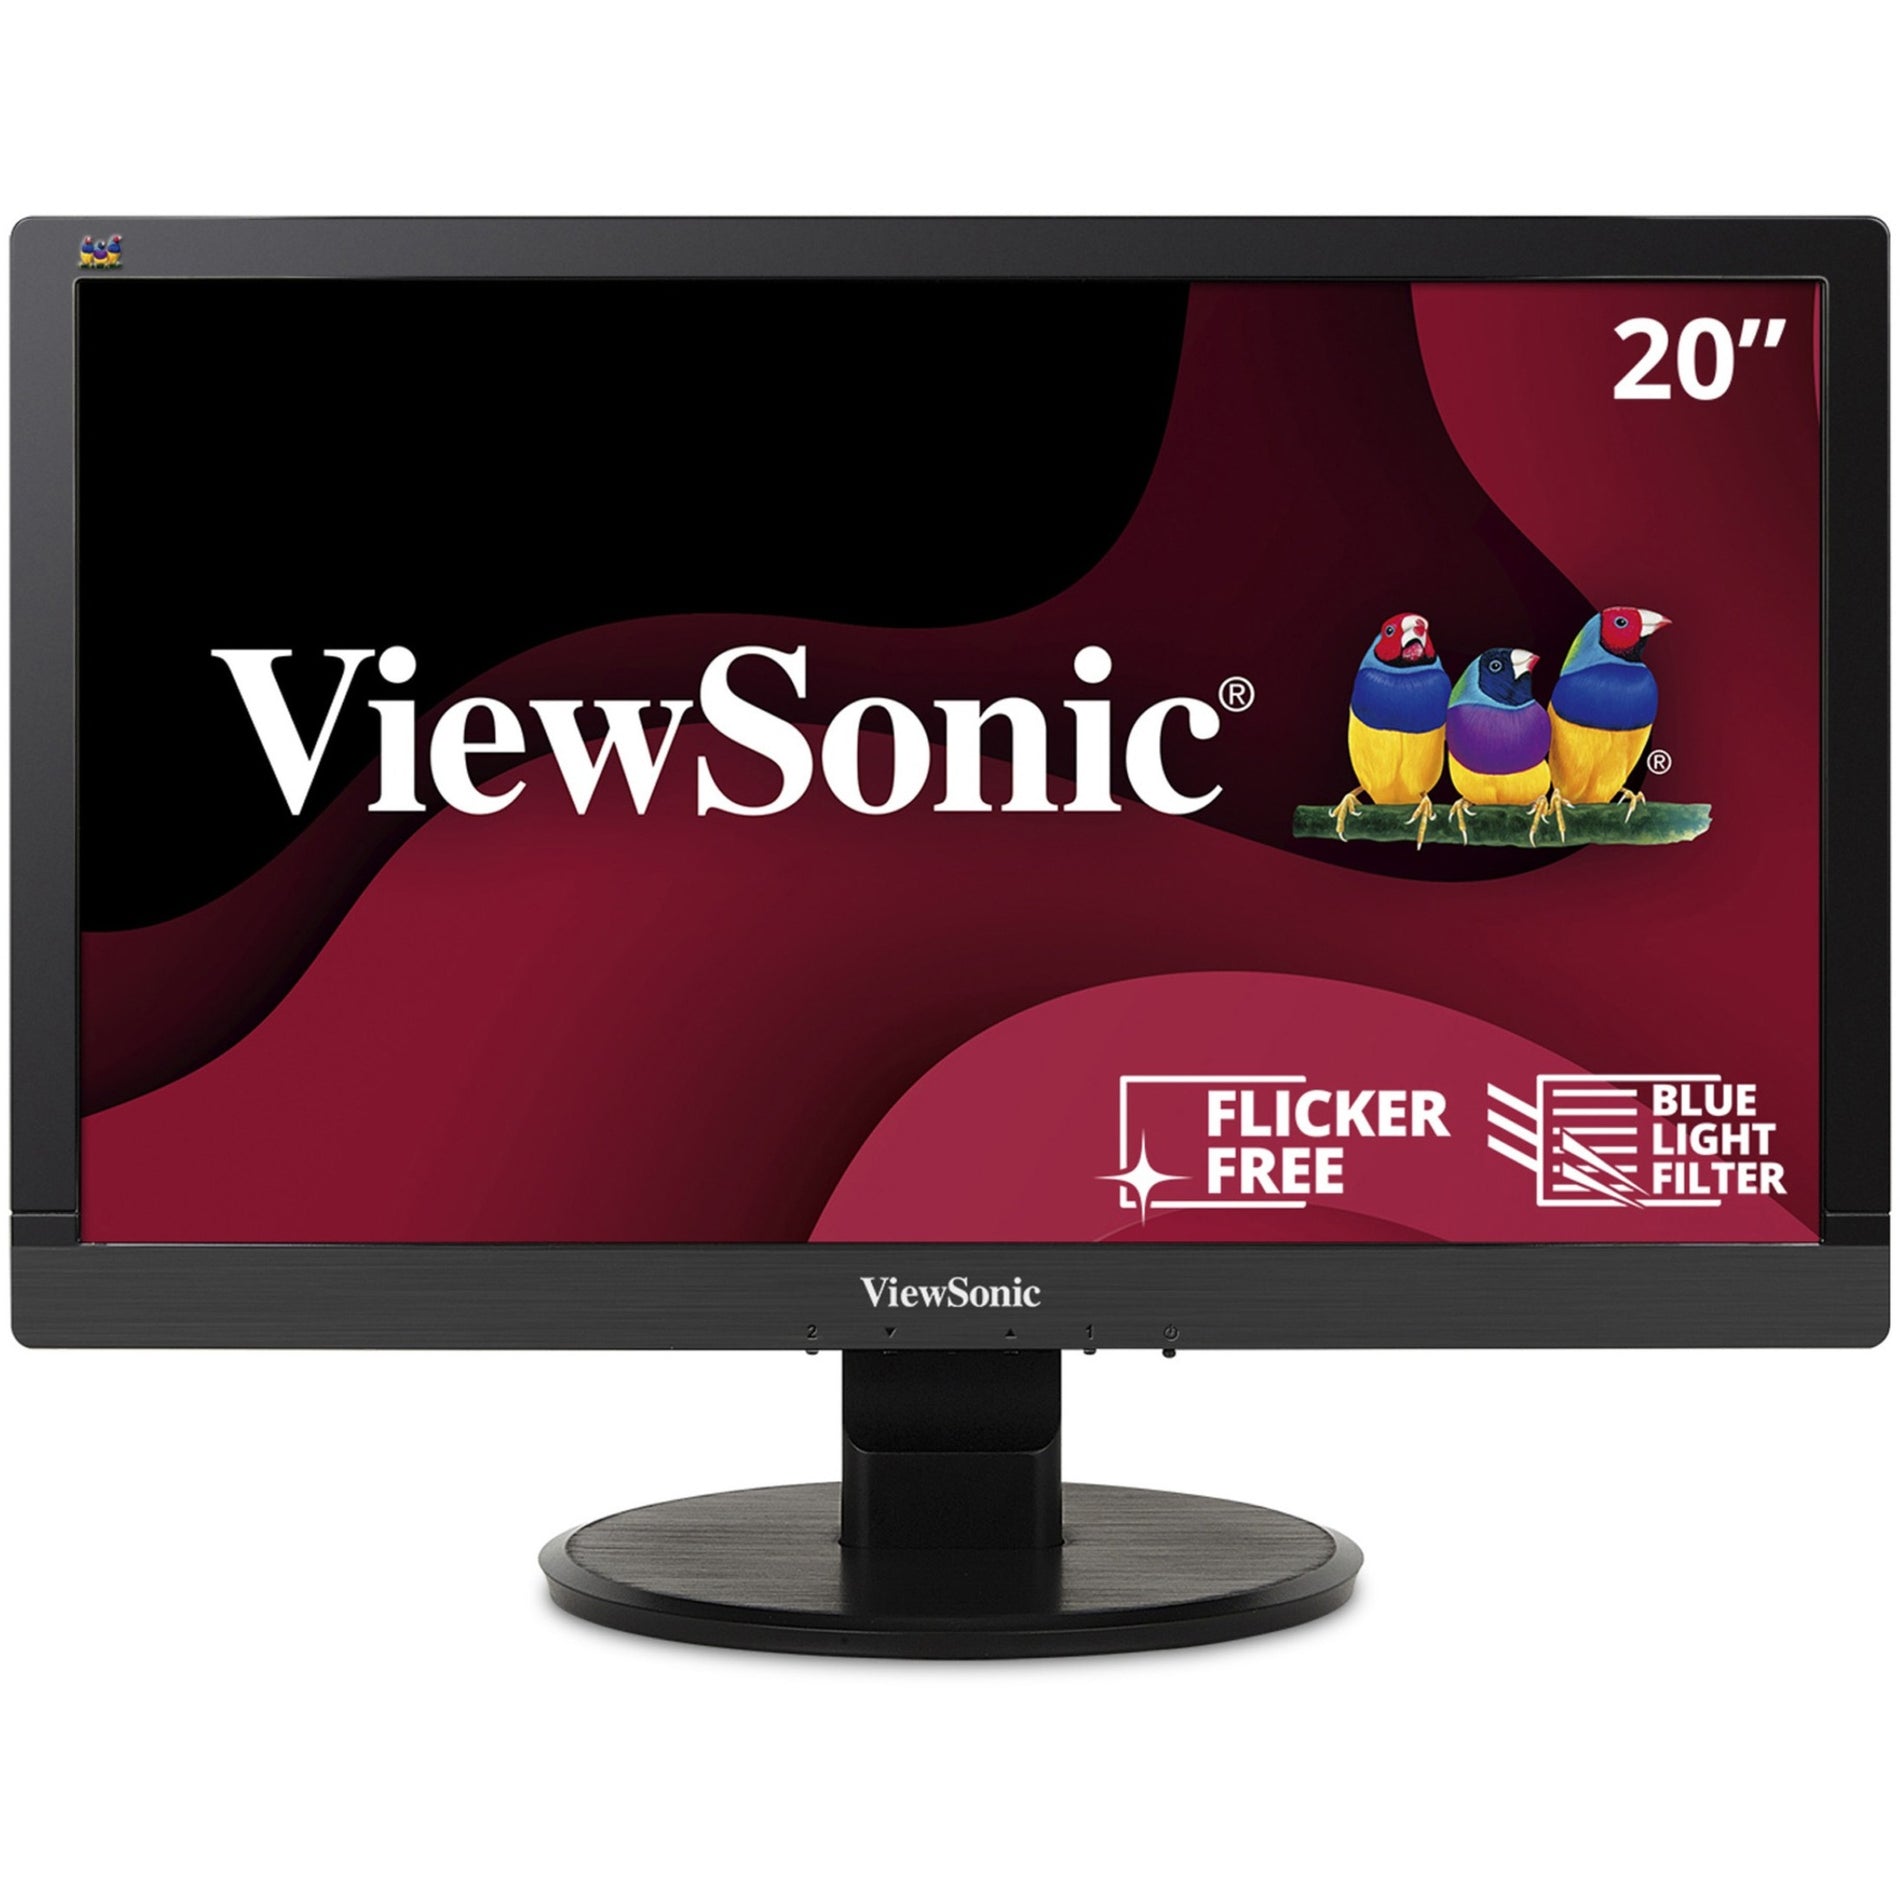 ViewSonic VA2055SA 20" Full HD LED Monitor, Black - High Contrast, Energy Star Certified